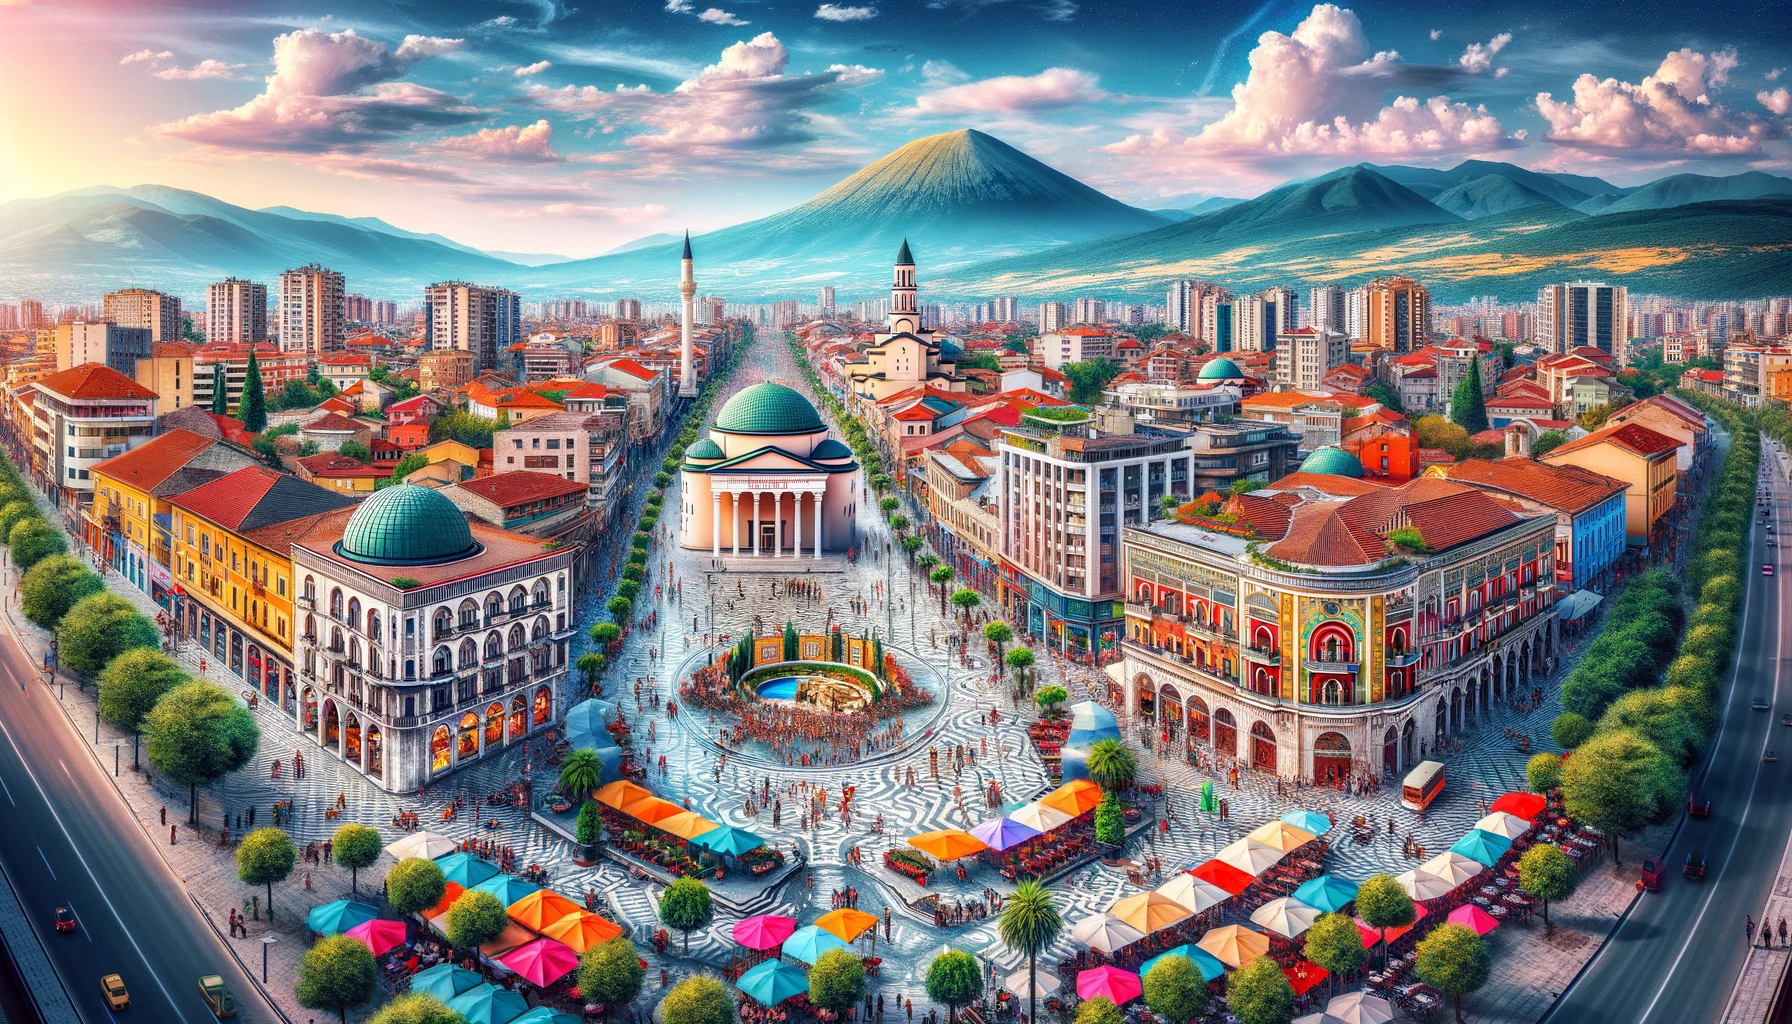 Discover Tirana Top Things to Do in Albania's Vibrant Capital City